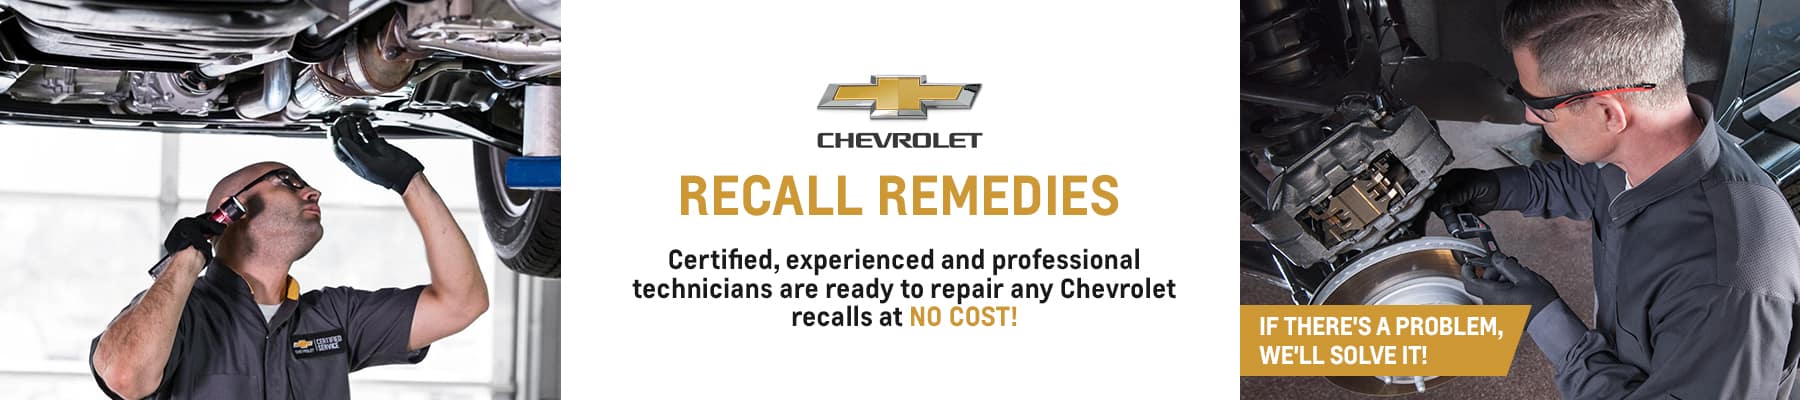 Chevrolet Recall Information